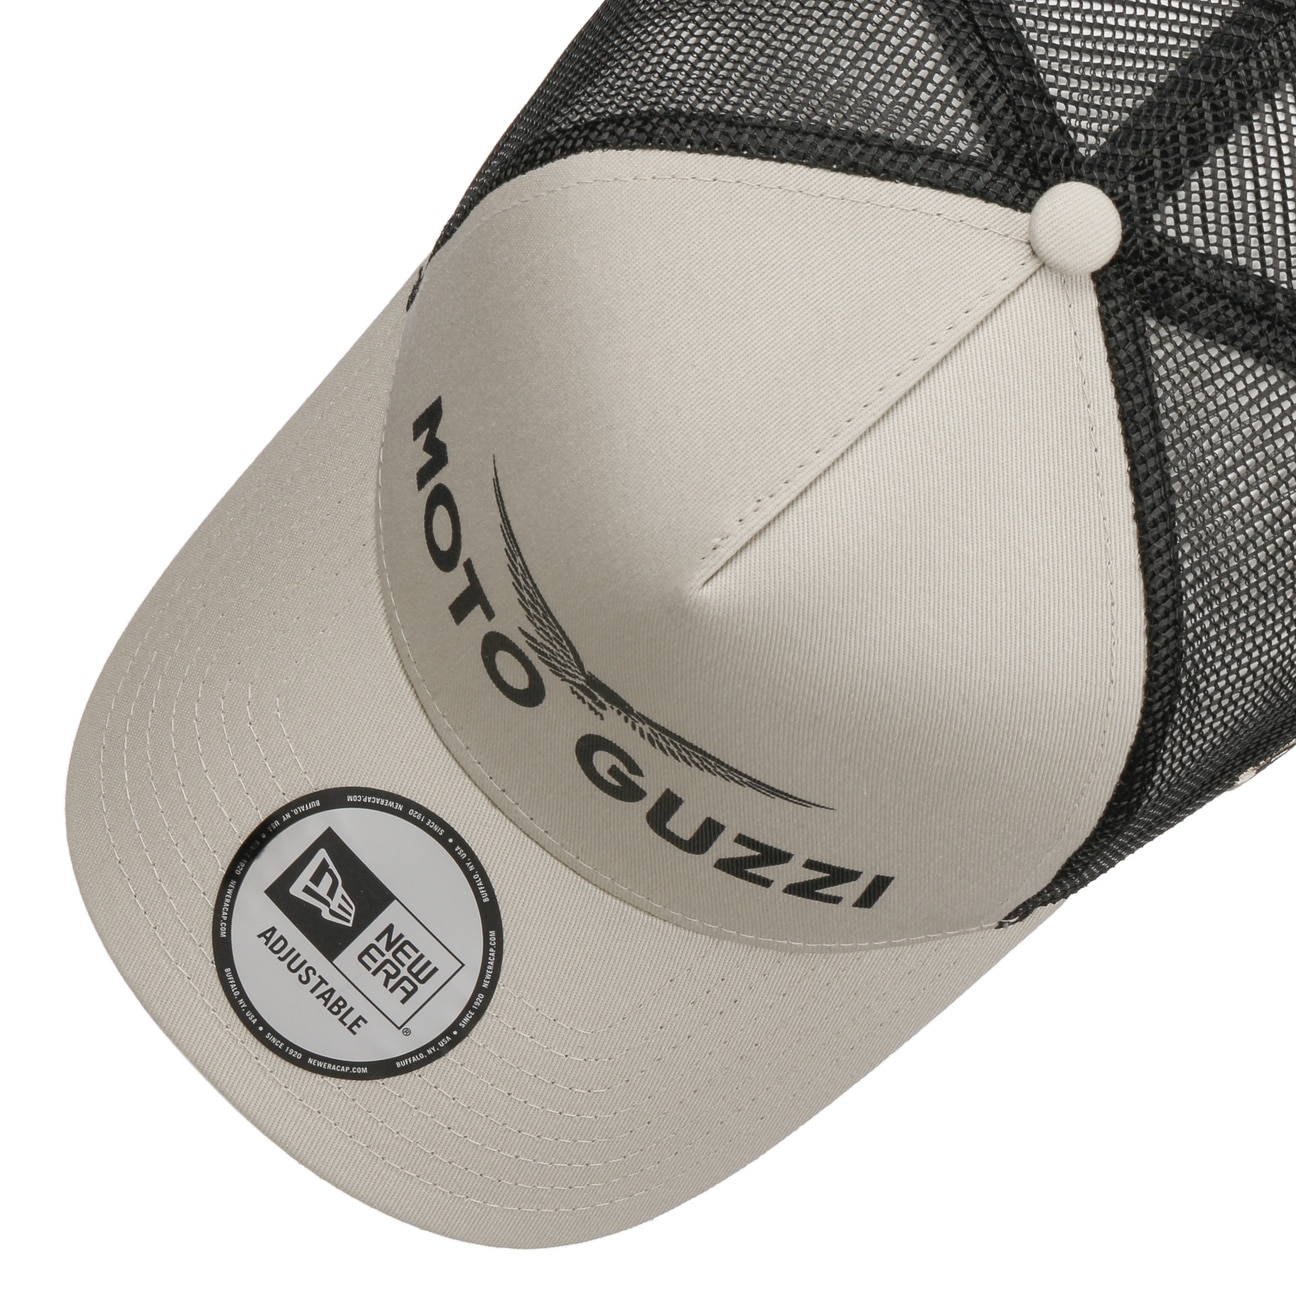 Moto Guzzi Trucker Cap by New Era - 479,00 kr